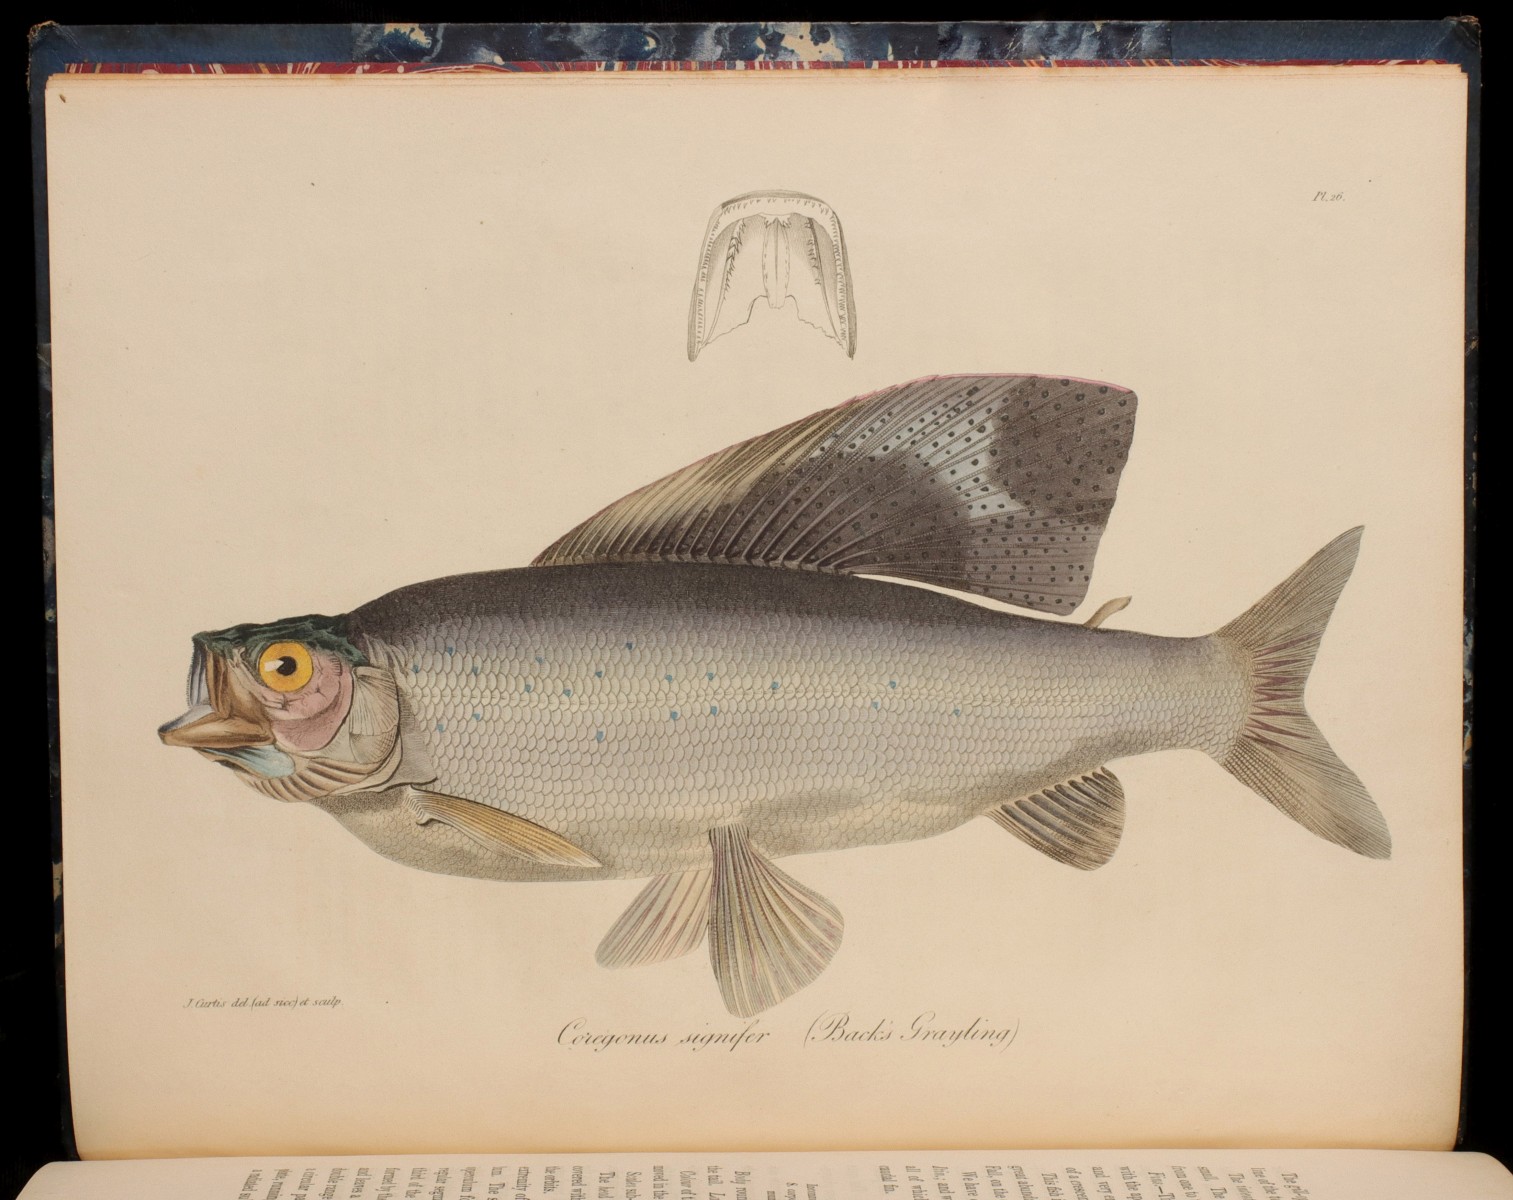 SIR JOHN RICHARDSON, NOTICES OF FISHES CIRCA 1820